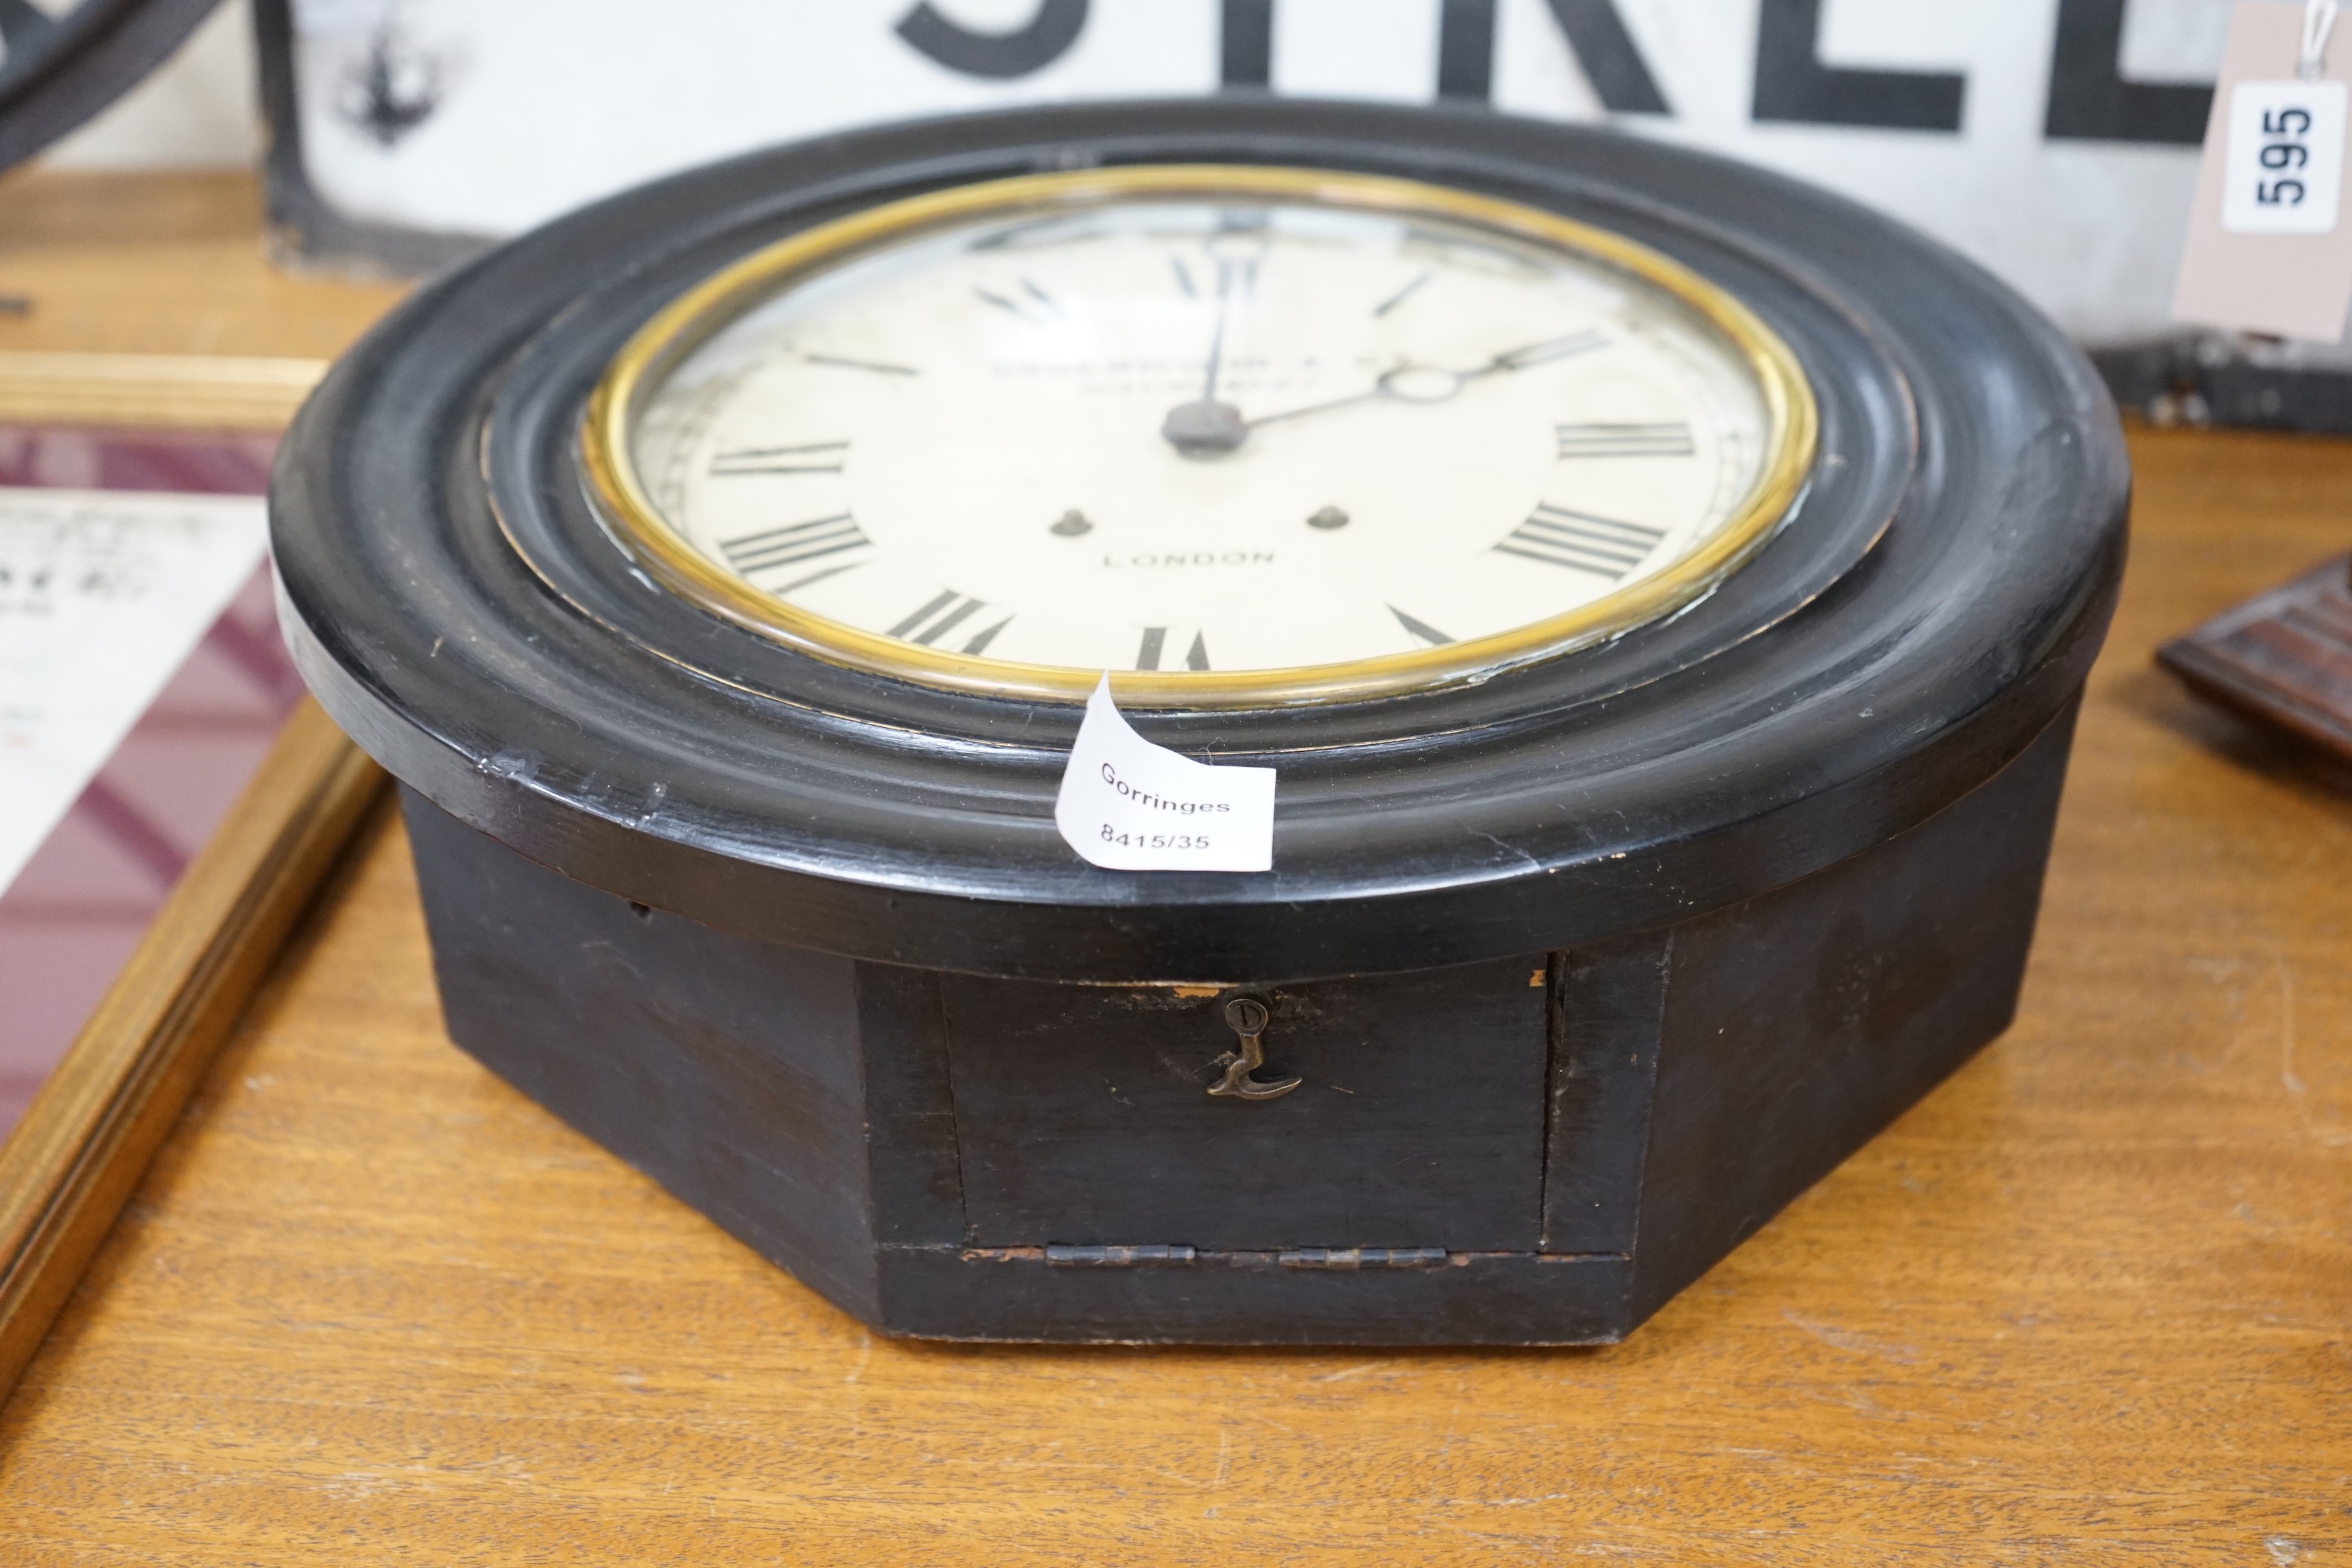 An Underwood & Company, Haymarket wall clock, 37cm diameter